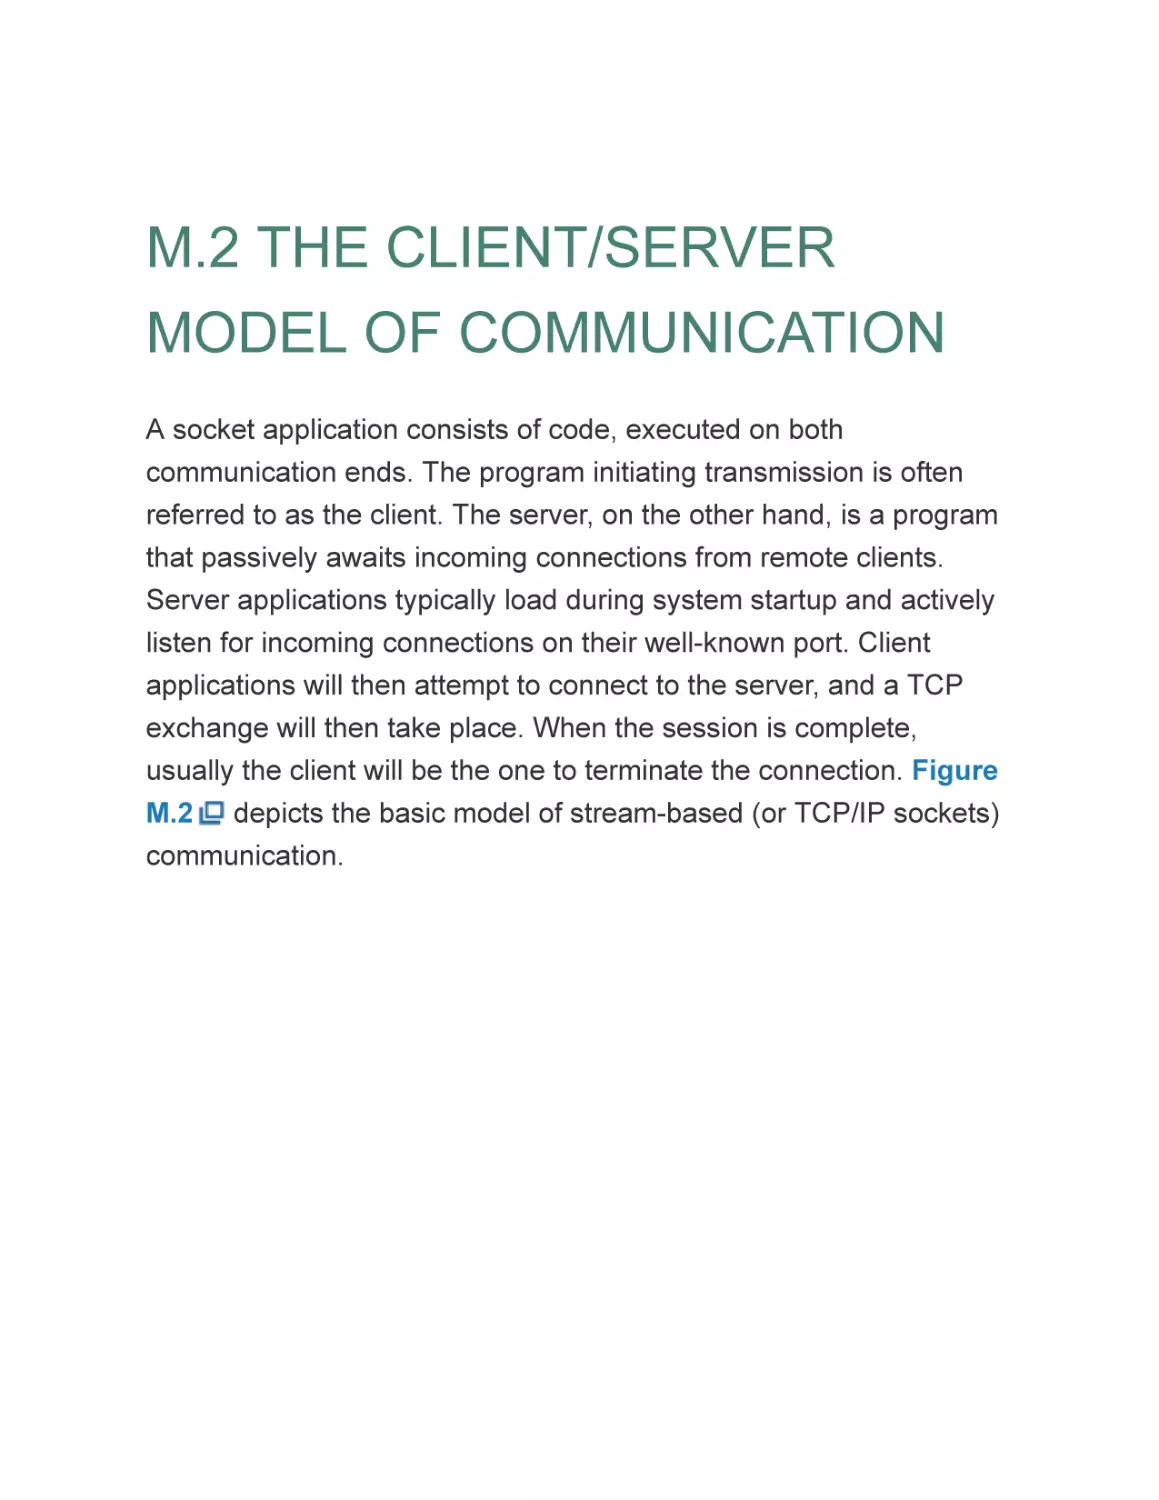 M.2 THE CLIENT/SERVER MODEL OF COMMUNICATION